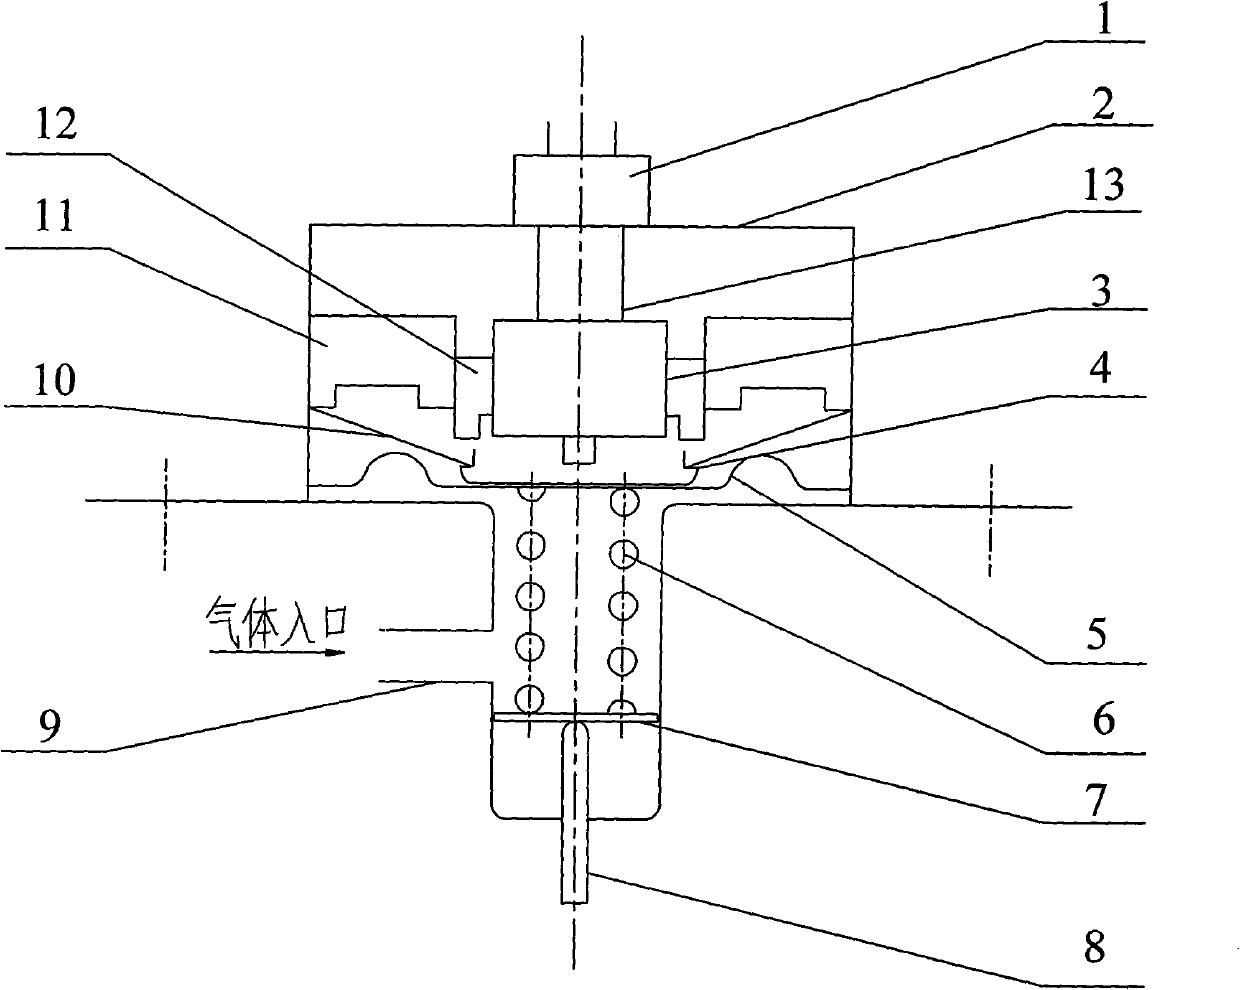 Coarse and fine adjustment combined pressure annunciator